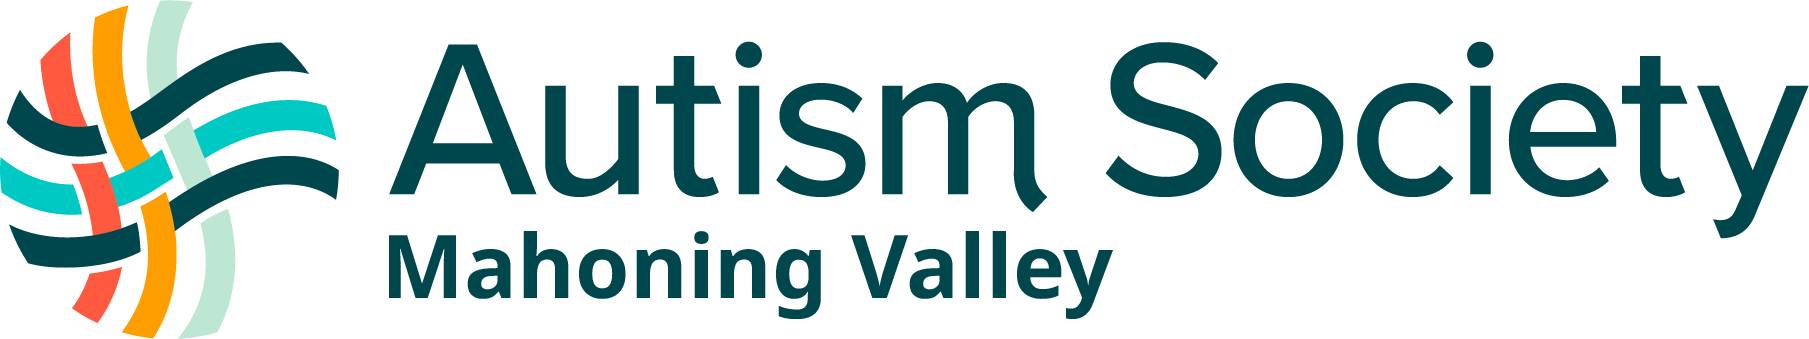 autism-society-mahoning-valley-logo